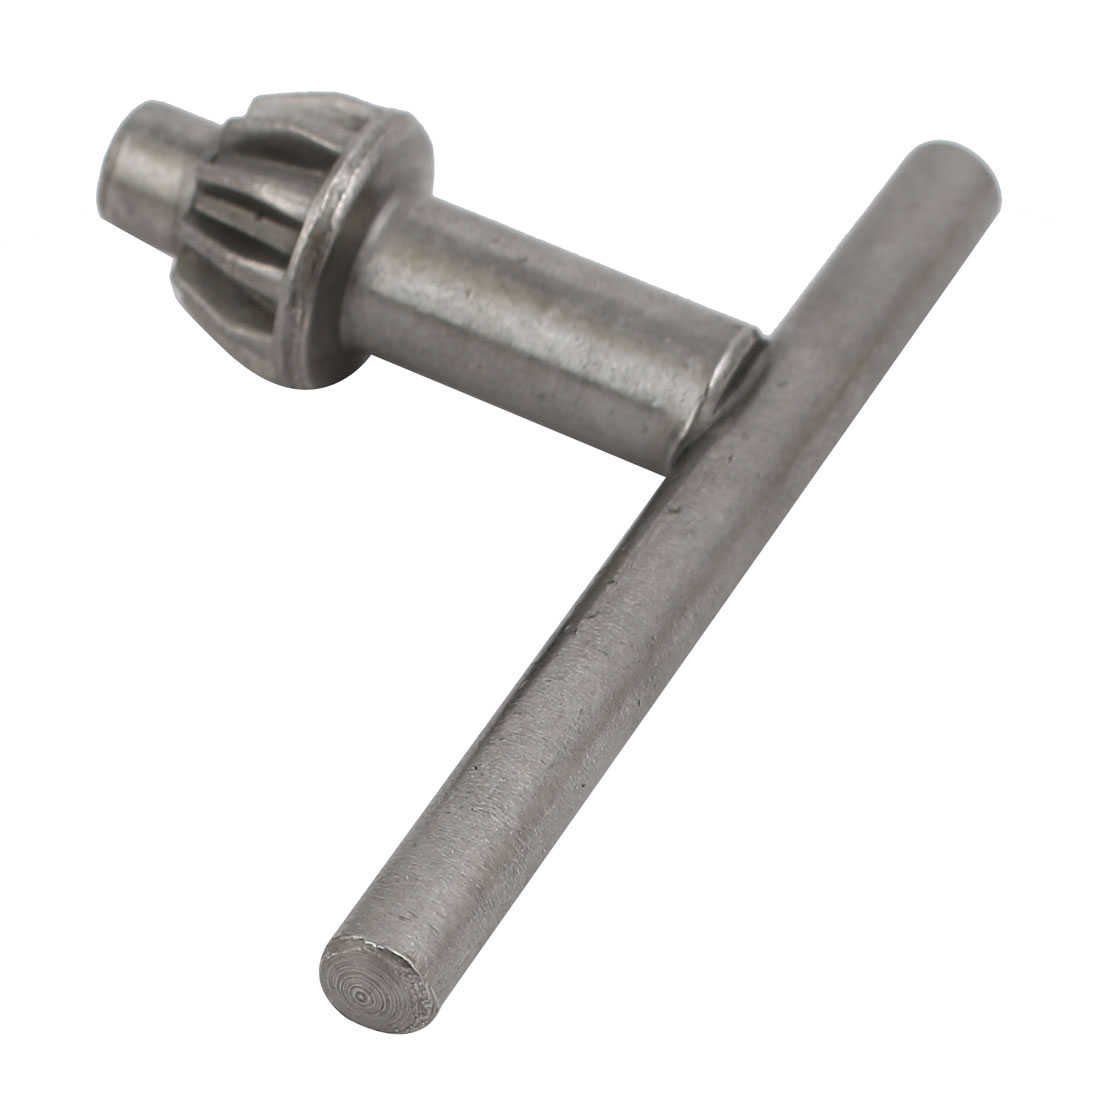 Unique Bargains Metal 6mm Diameter Key Gear Spanner Drill Chuck Key Loosen Tighten Tool 3pcs